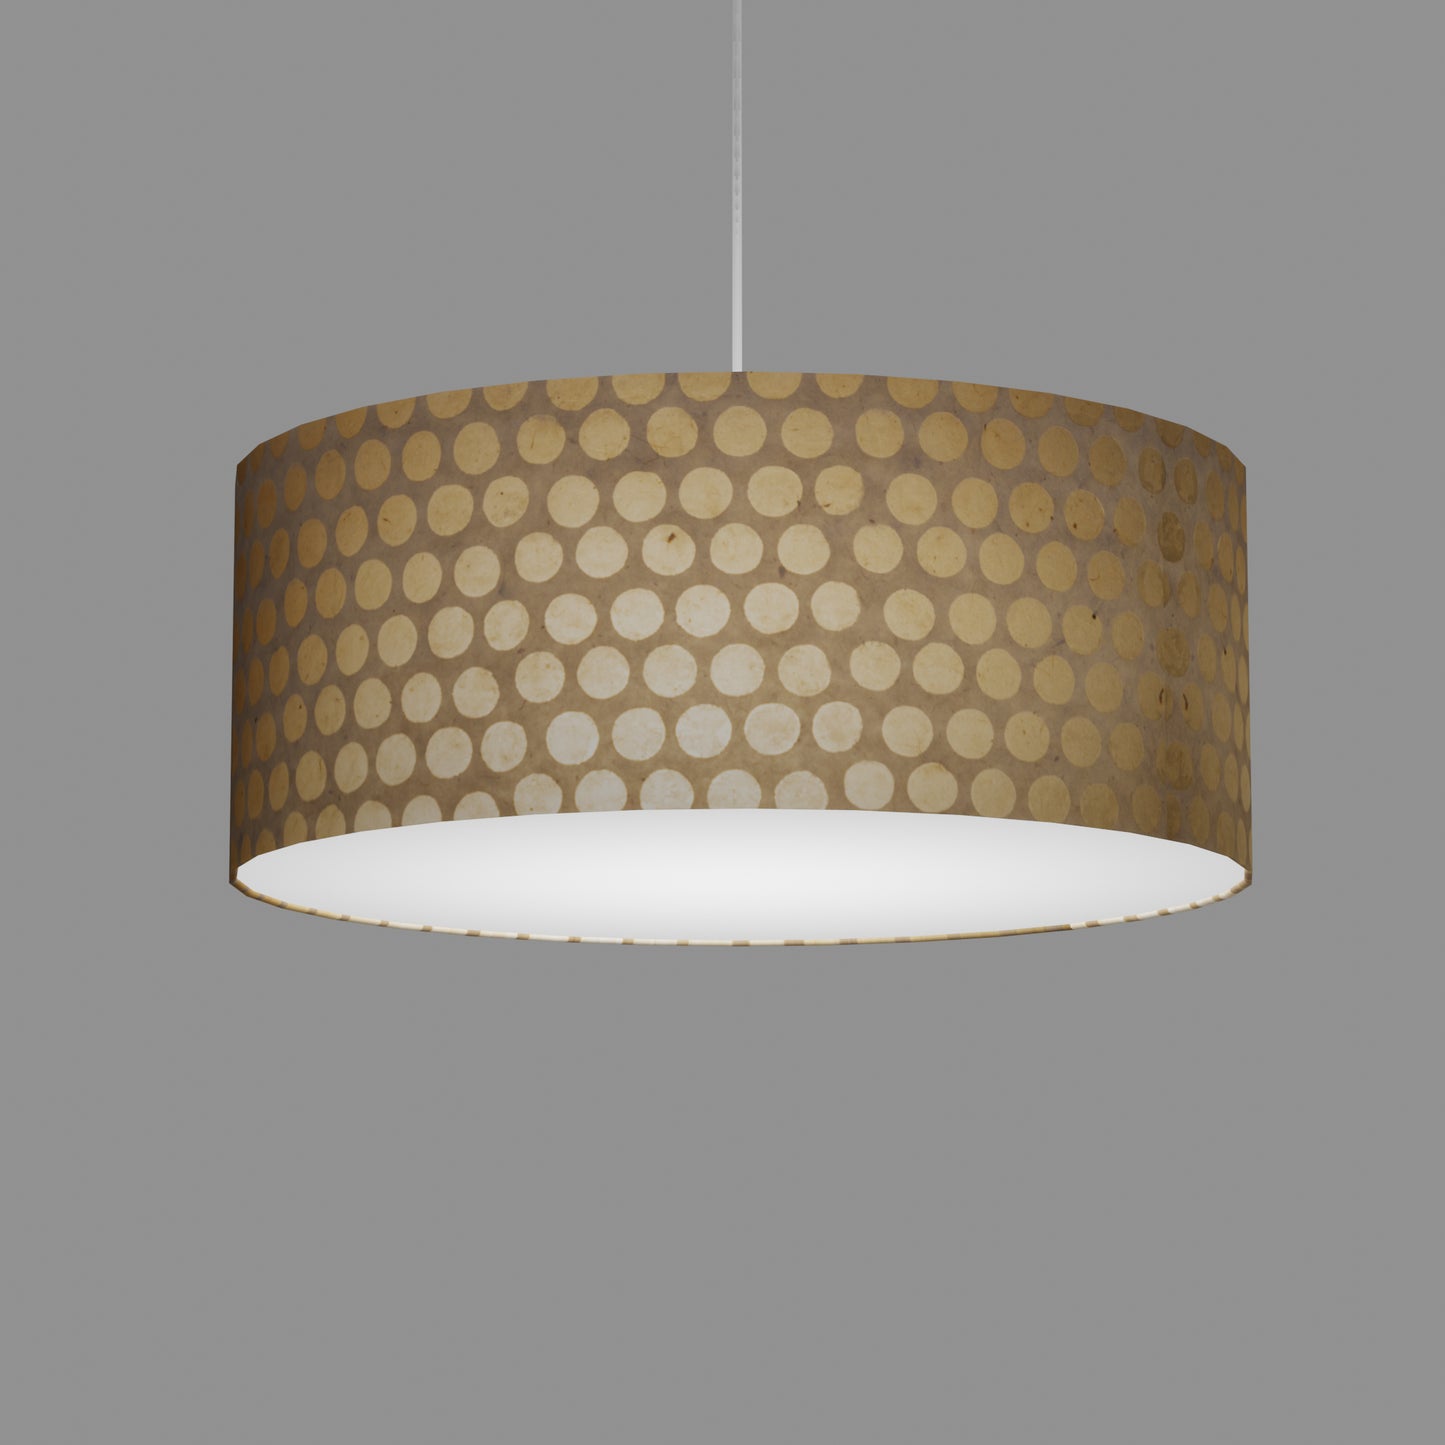 Drum Lamp Shade - P85 ~ Batik Dots on Natural, 50cm(d) x 20cm(h)